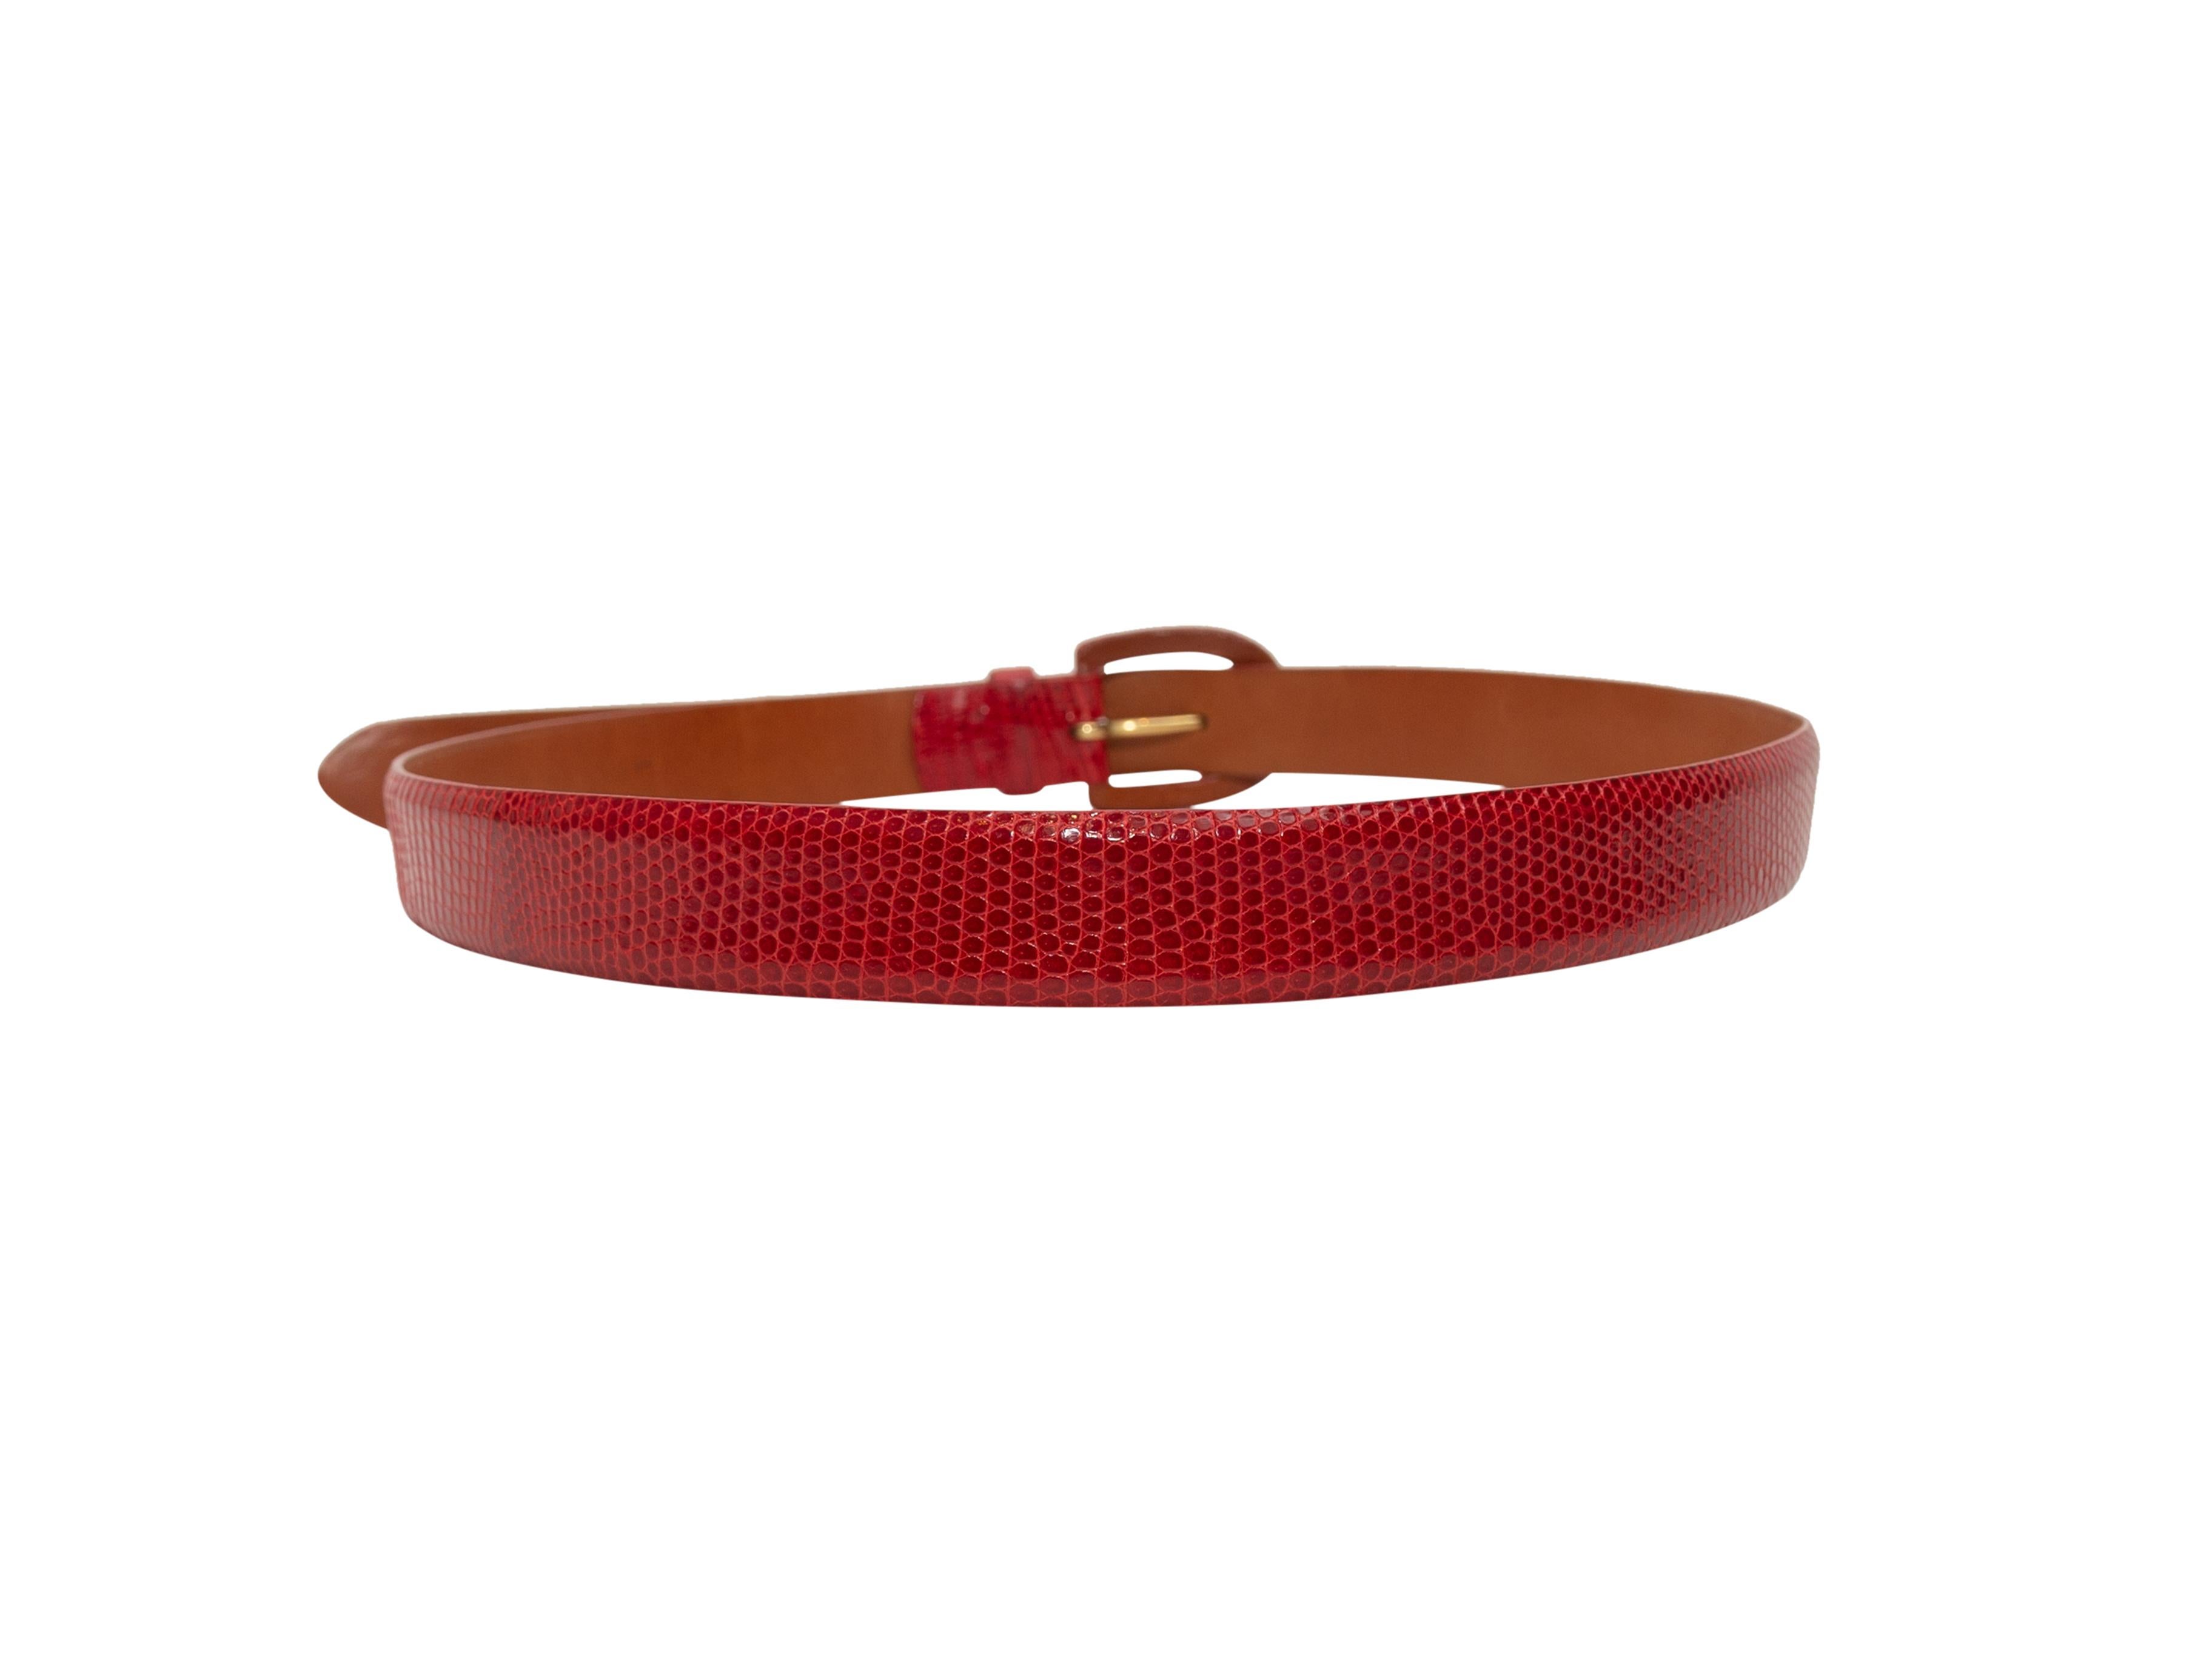 Product details: Red lizard skin belt by Ralph Lauren. Buckle closure. 1